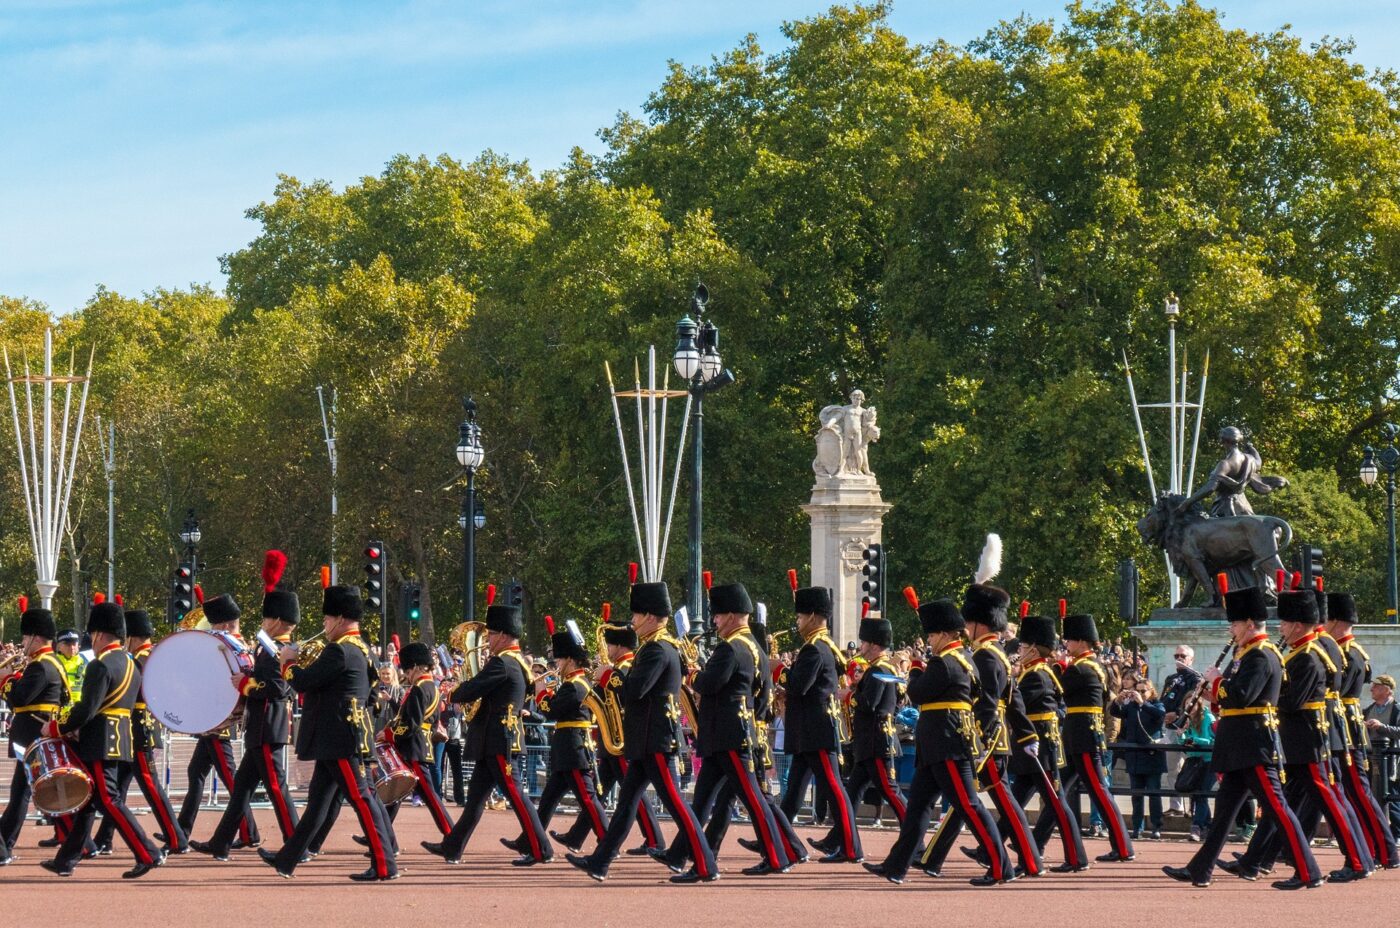 Marching royal guards